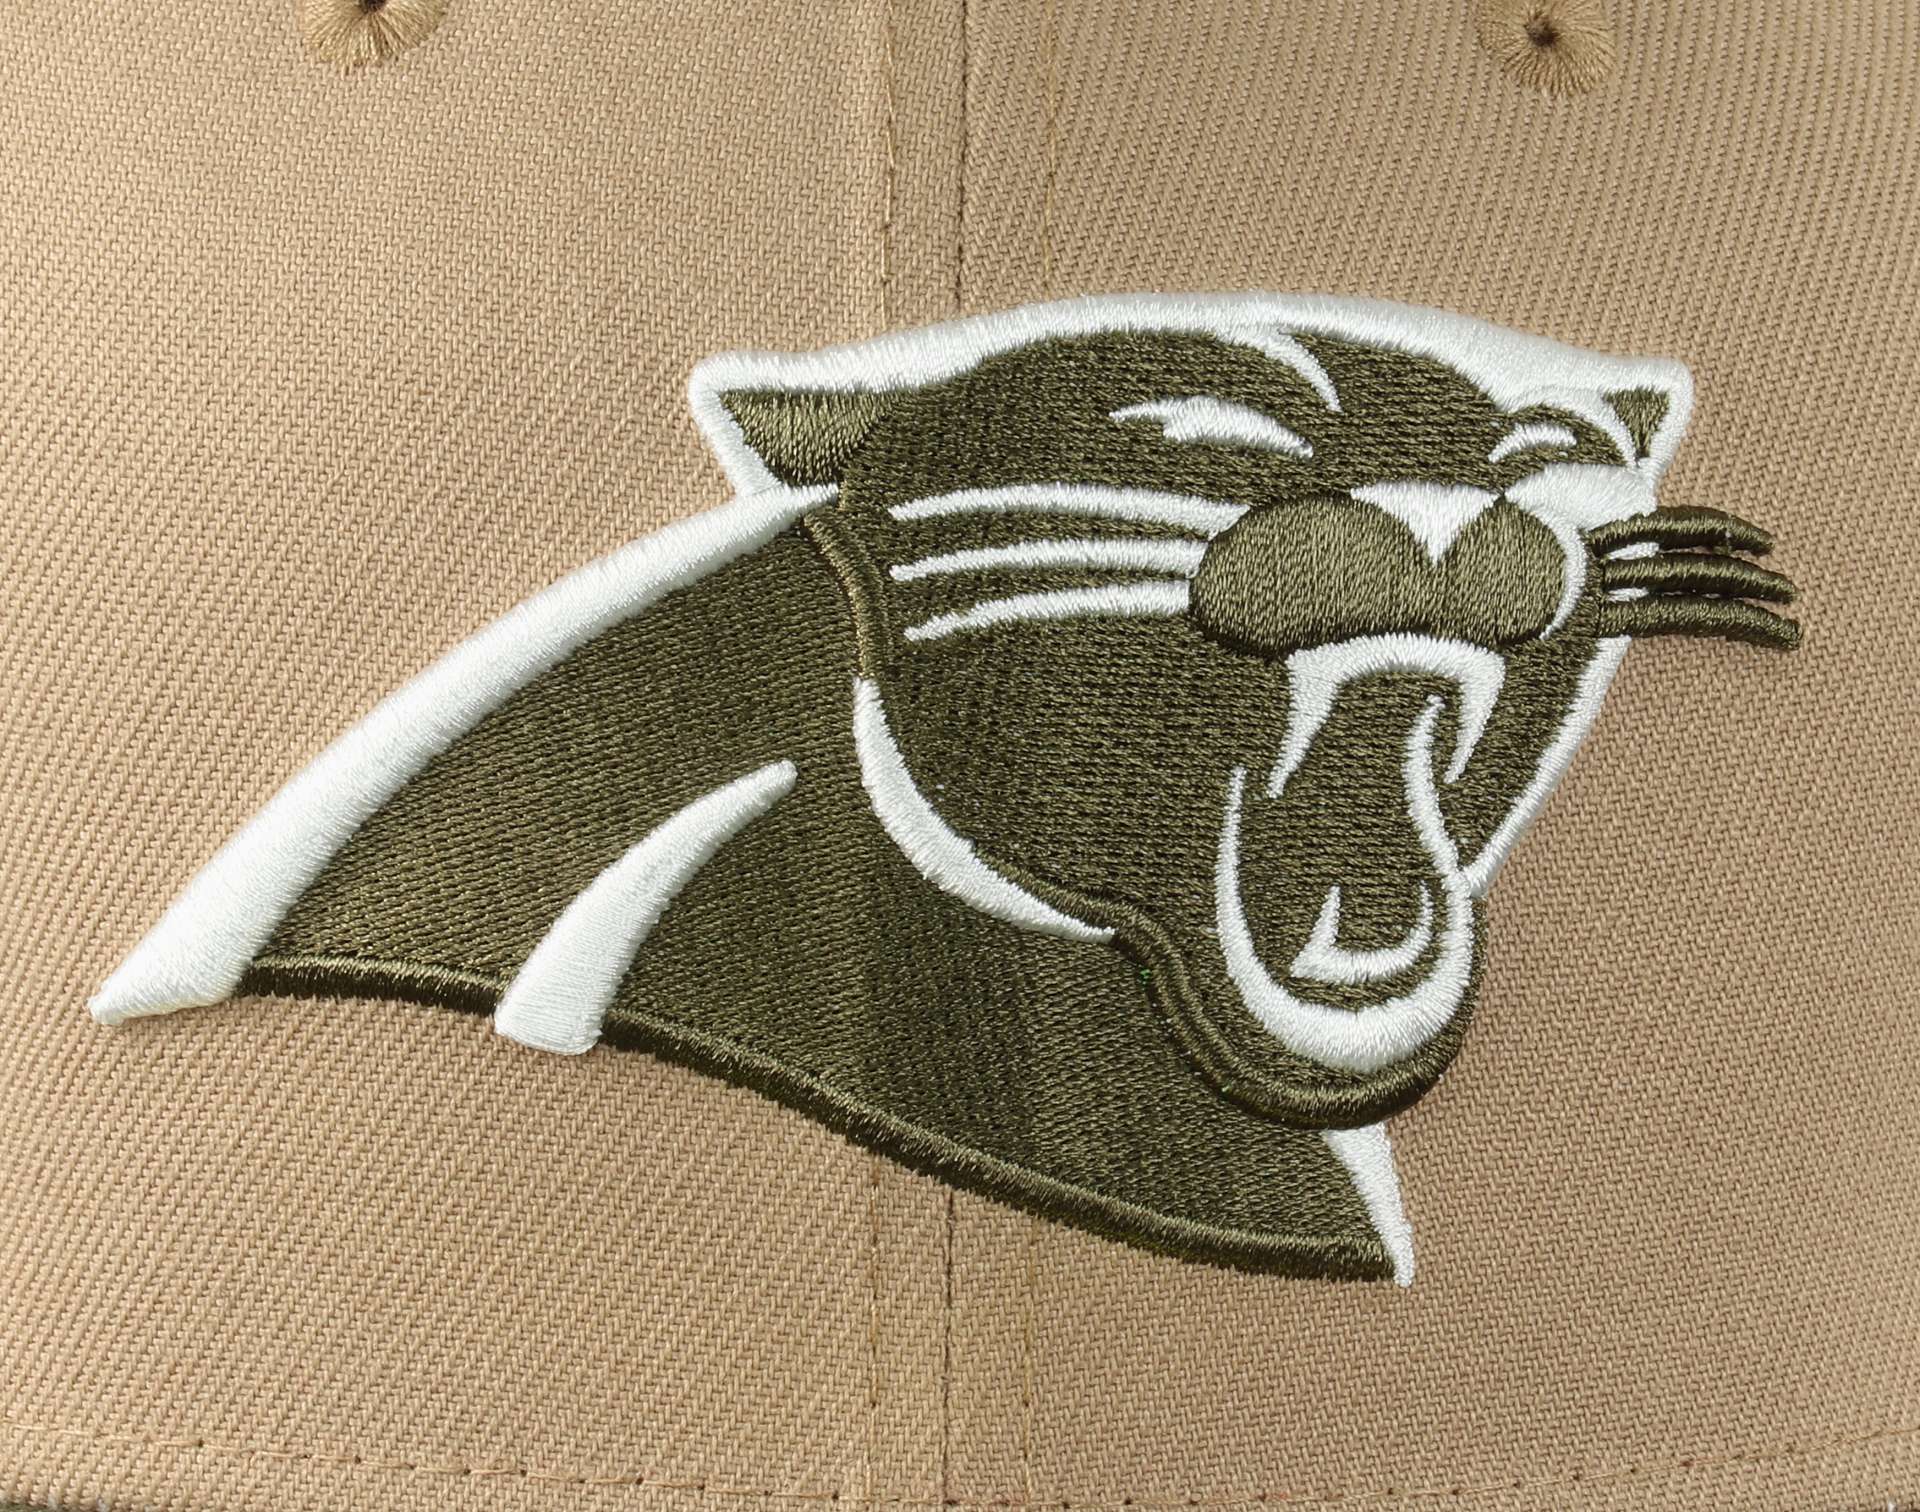 Carolina Panthers NFL 25 Seasons Sidepatch Camel Olive 59Fifty Basecap New Era